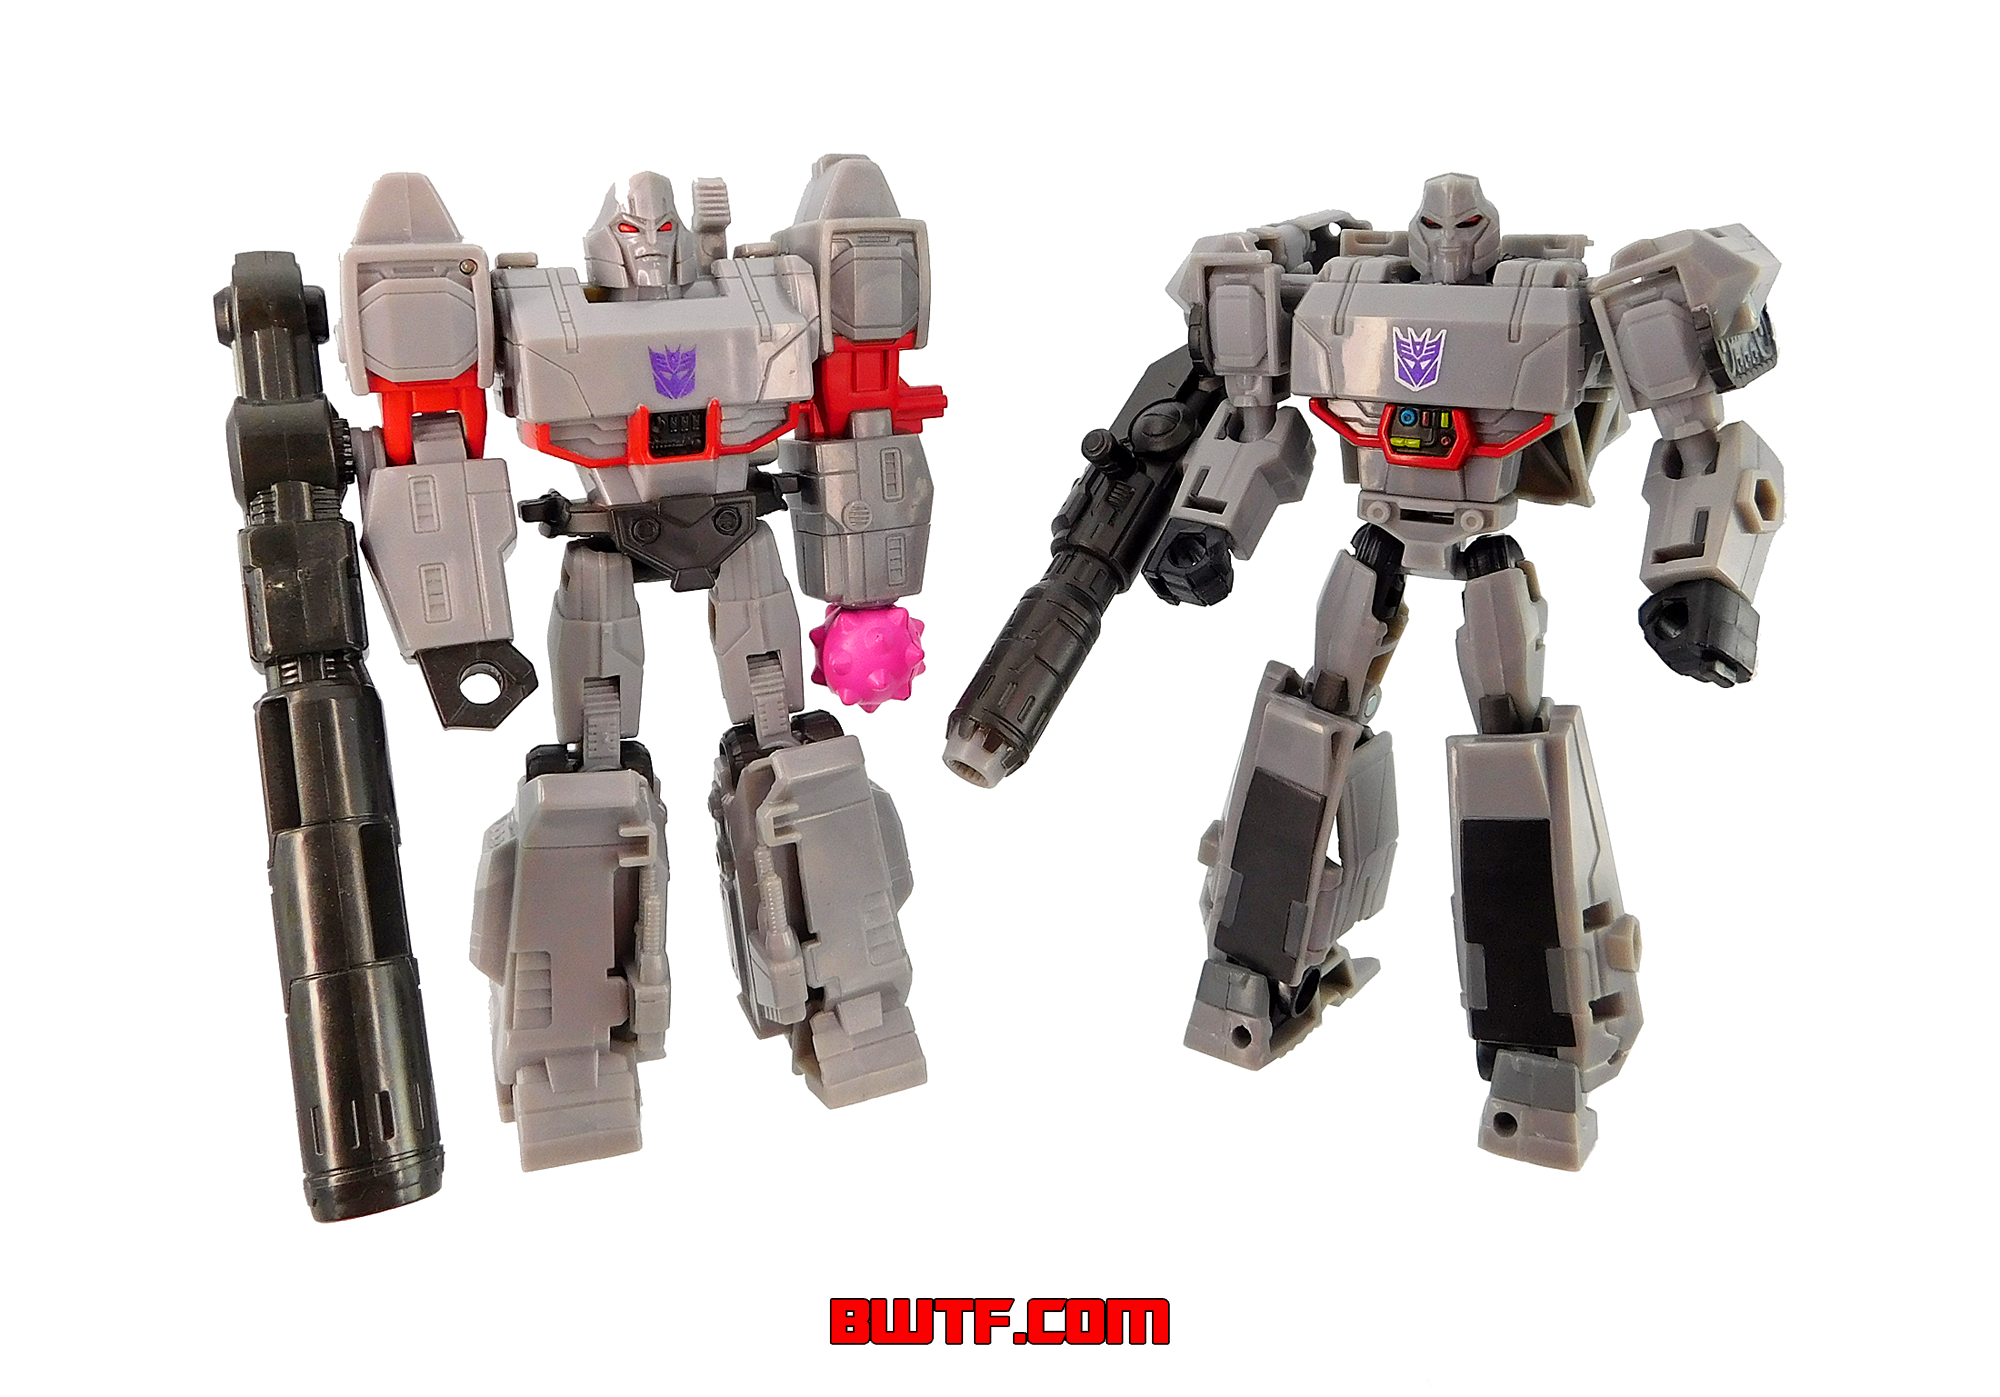 Details about   Transformers Toys Cyberverse Deluxe Class Megatron Action Figure 